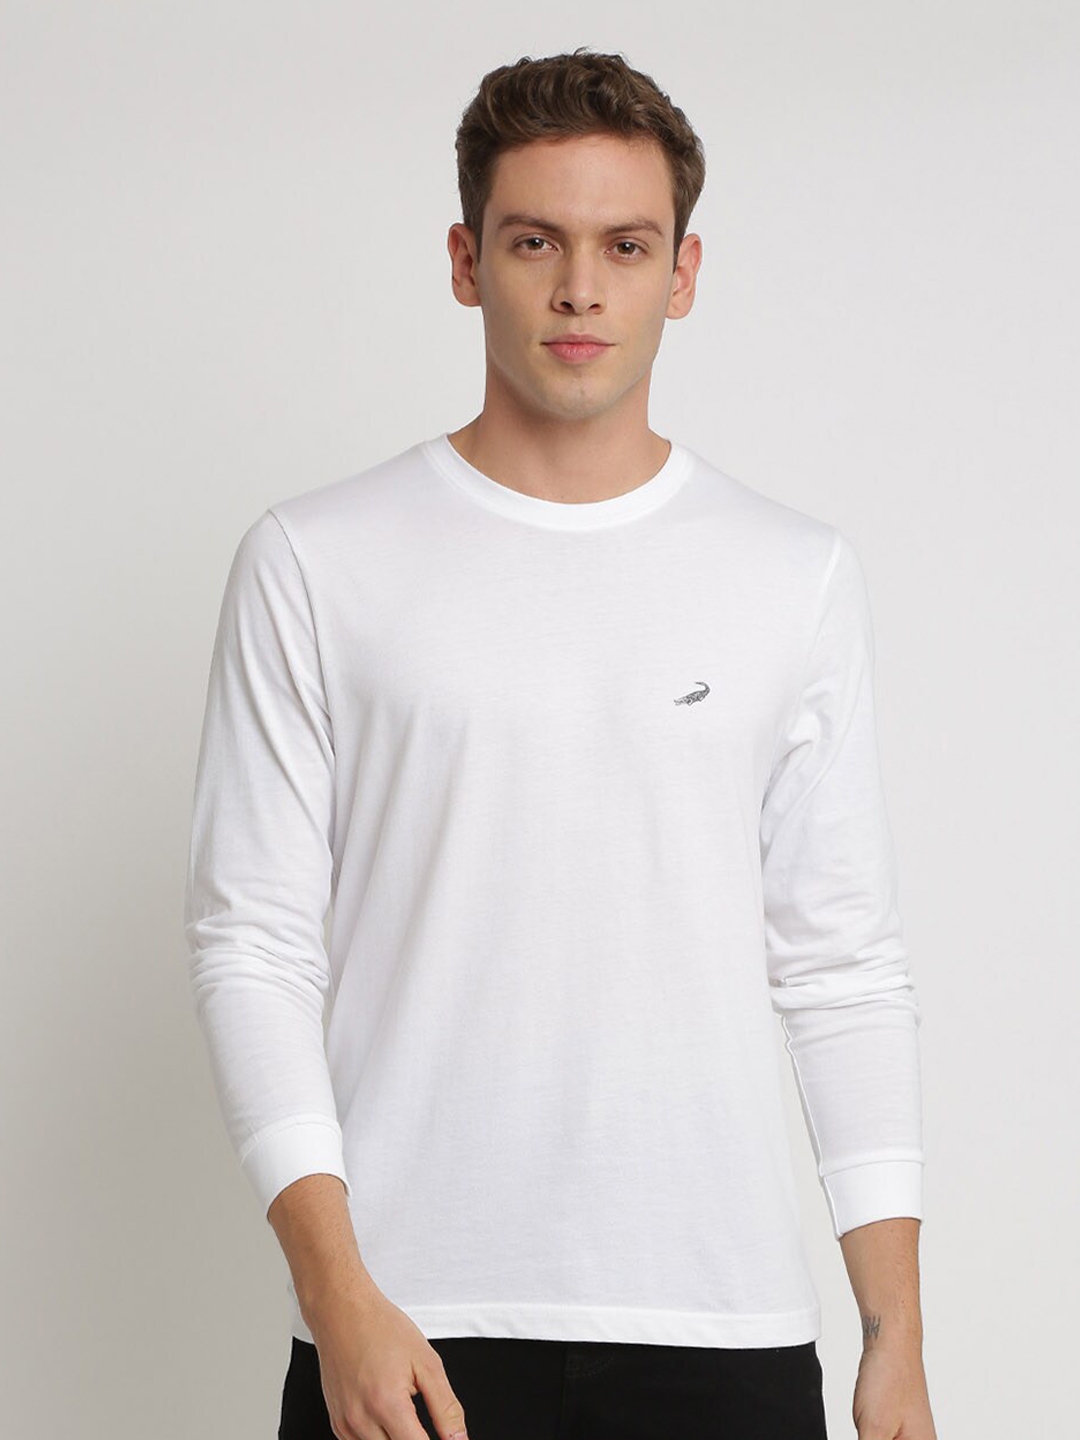 Buy Crocodile Men White Solid T Shirt - Tshirts for Men 15357464 | Myntra